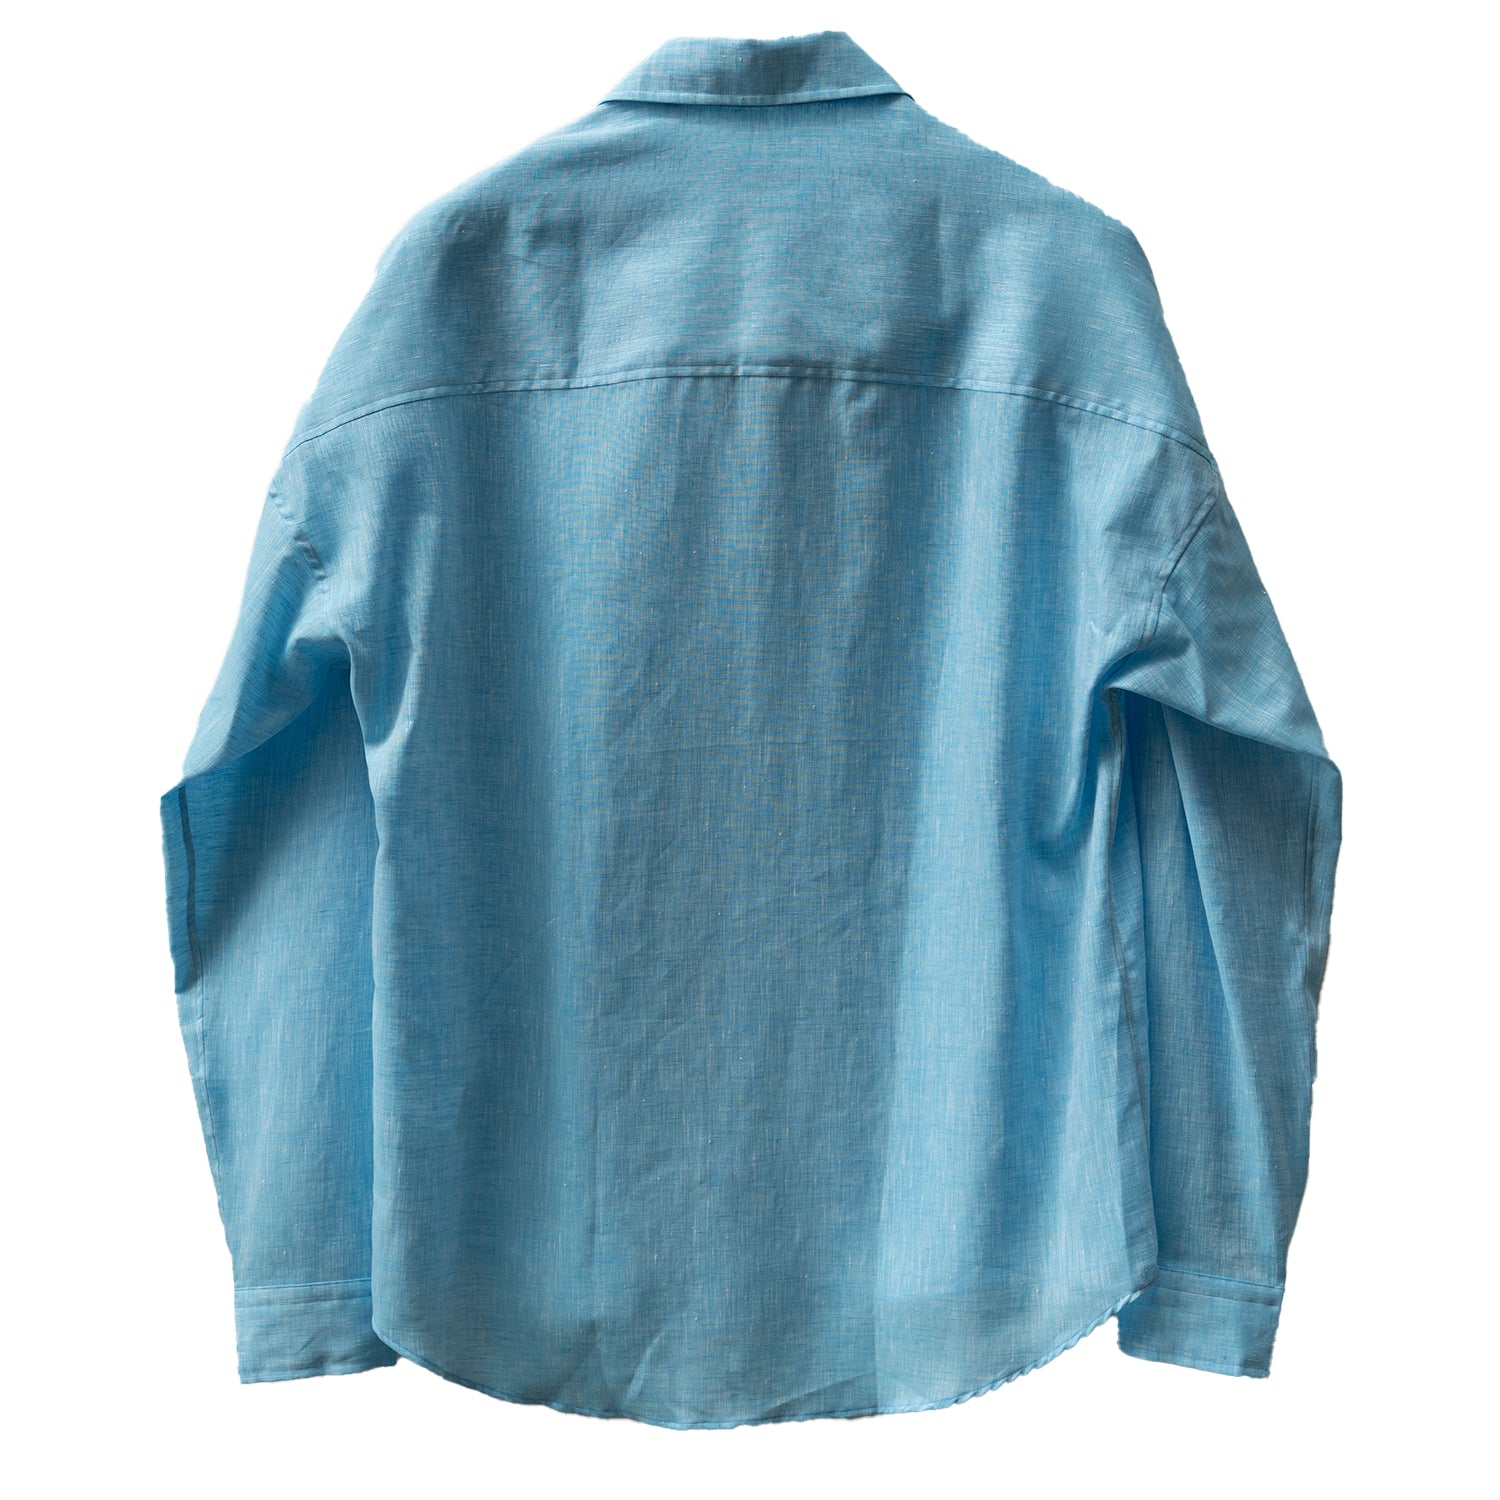 COLONY CLOTHING / ALBINI リネン プールサイドシャツ / CC2301-SH02 